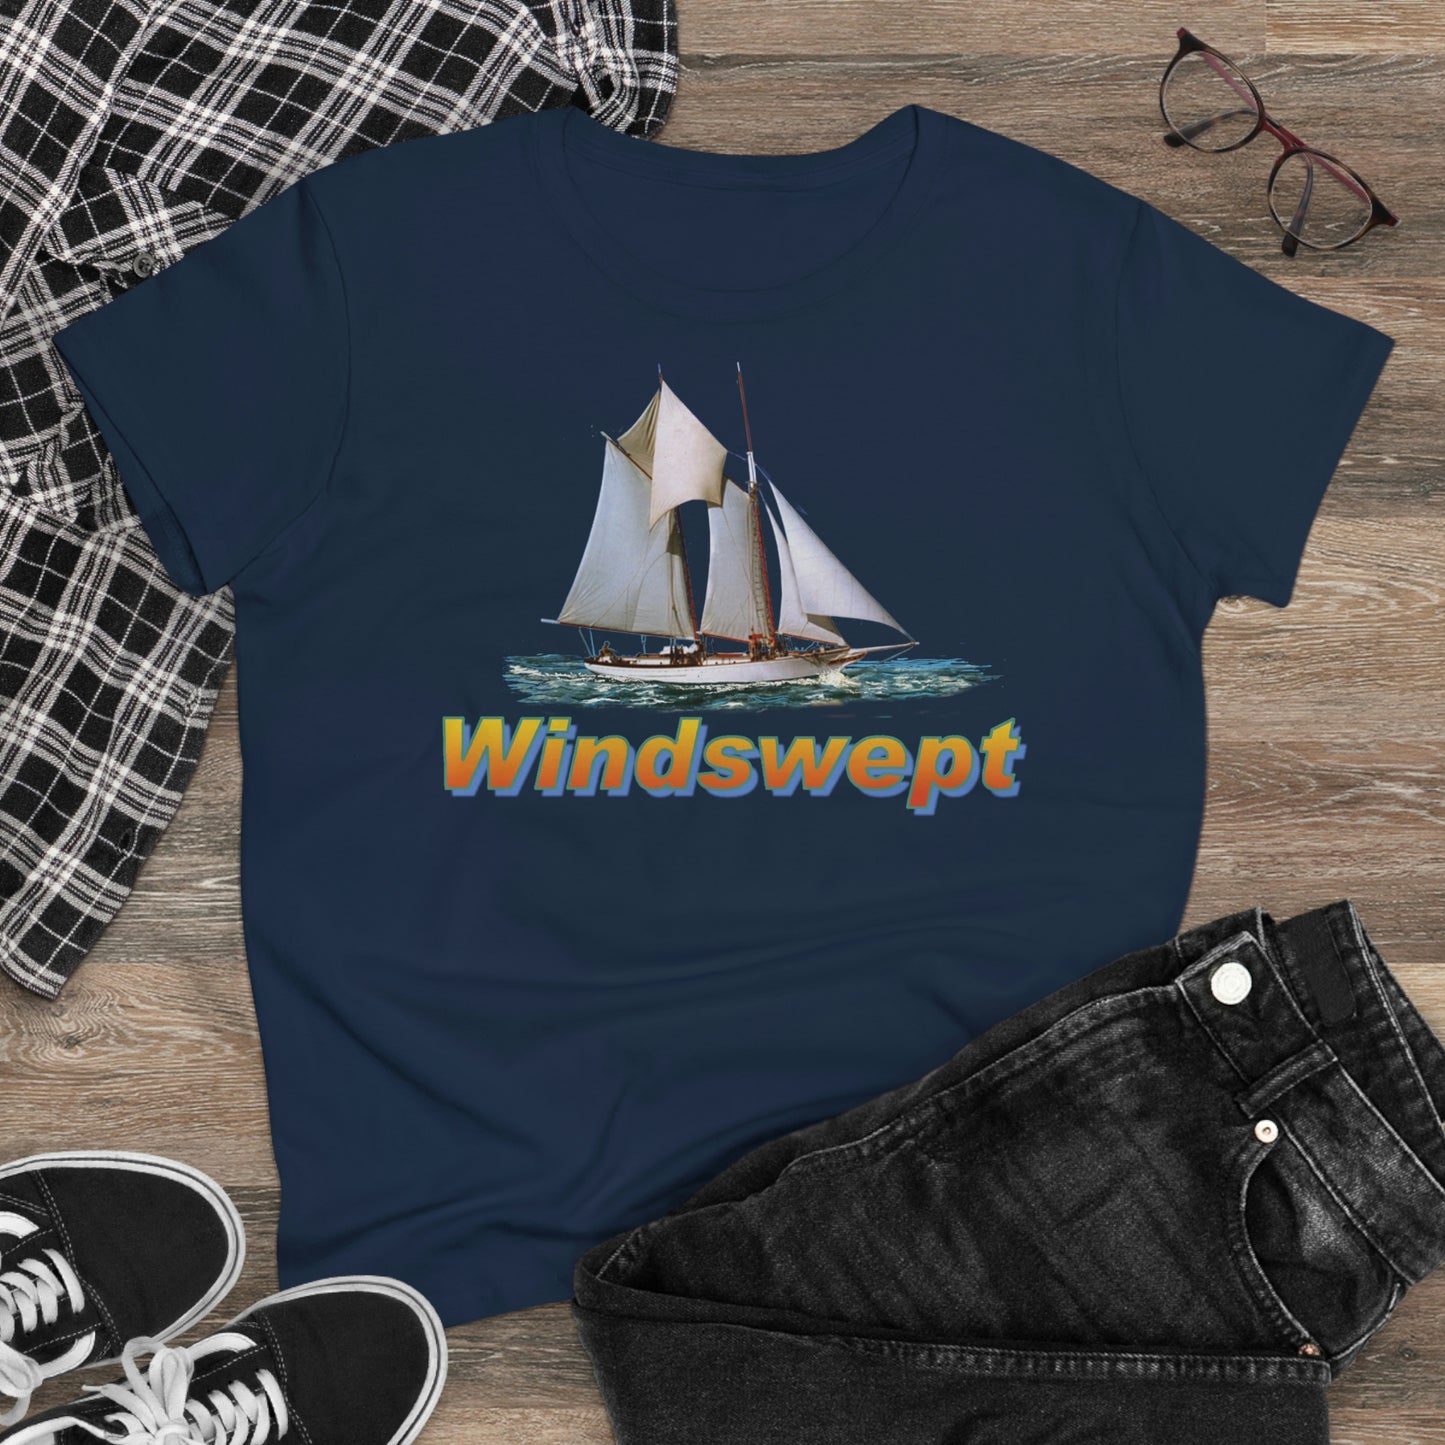 Windswept T-Shirt, William H Aubrey sailboat.  Women's Midweight Cotton Tee